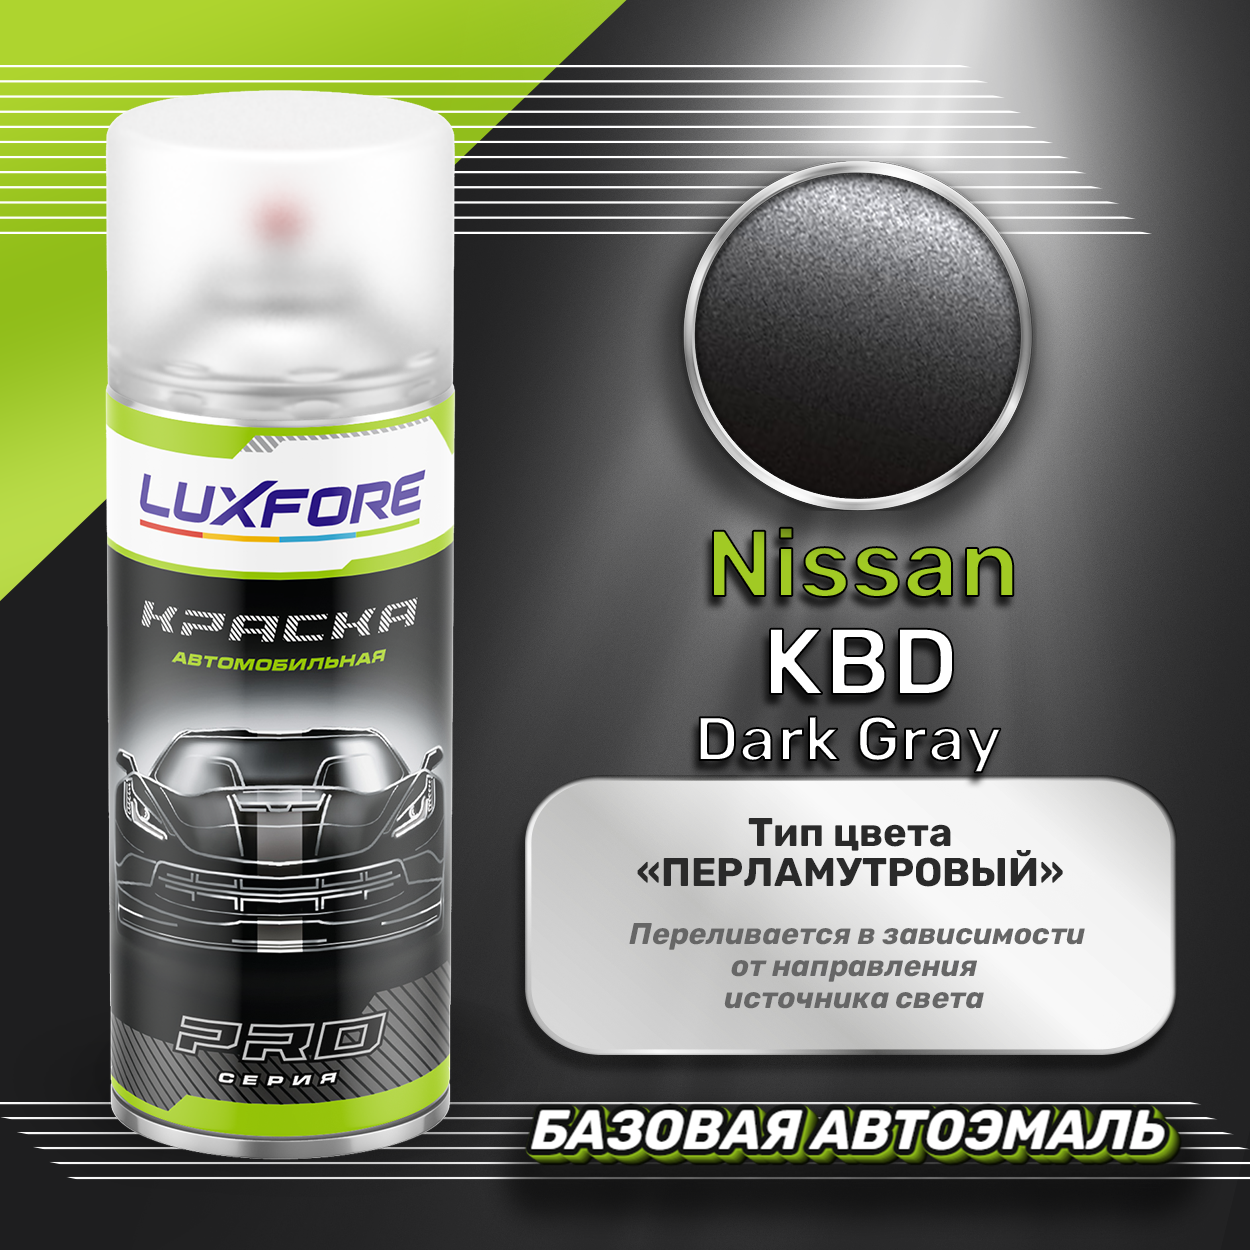 Luxfore аэрозольная краска Nissan KBD Dark Gray 400 мл